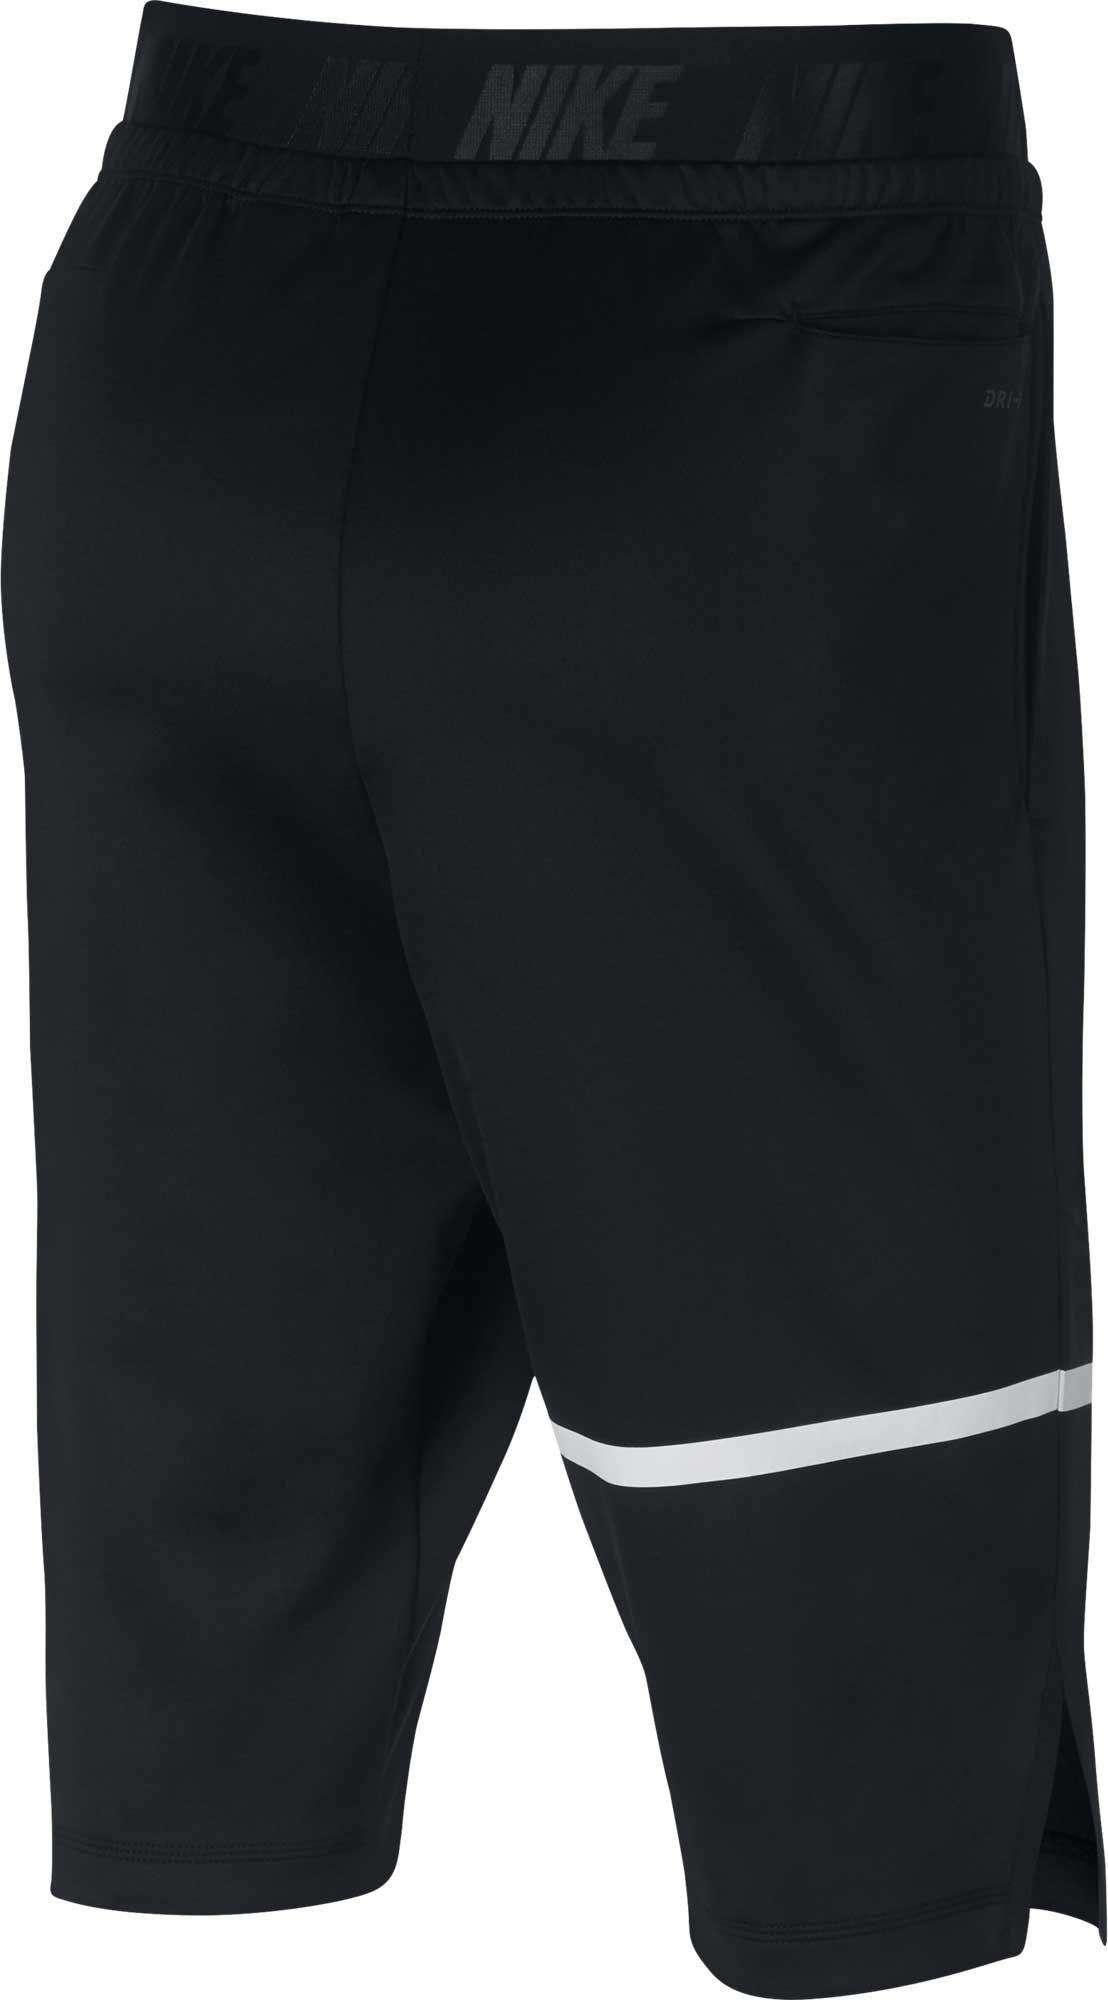 Nike Dry Over-the-knee 2.0 Training Shorts in Black for Men - Lyst